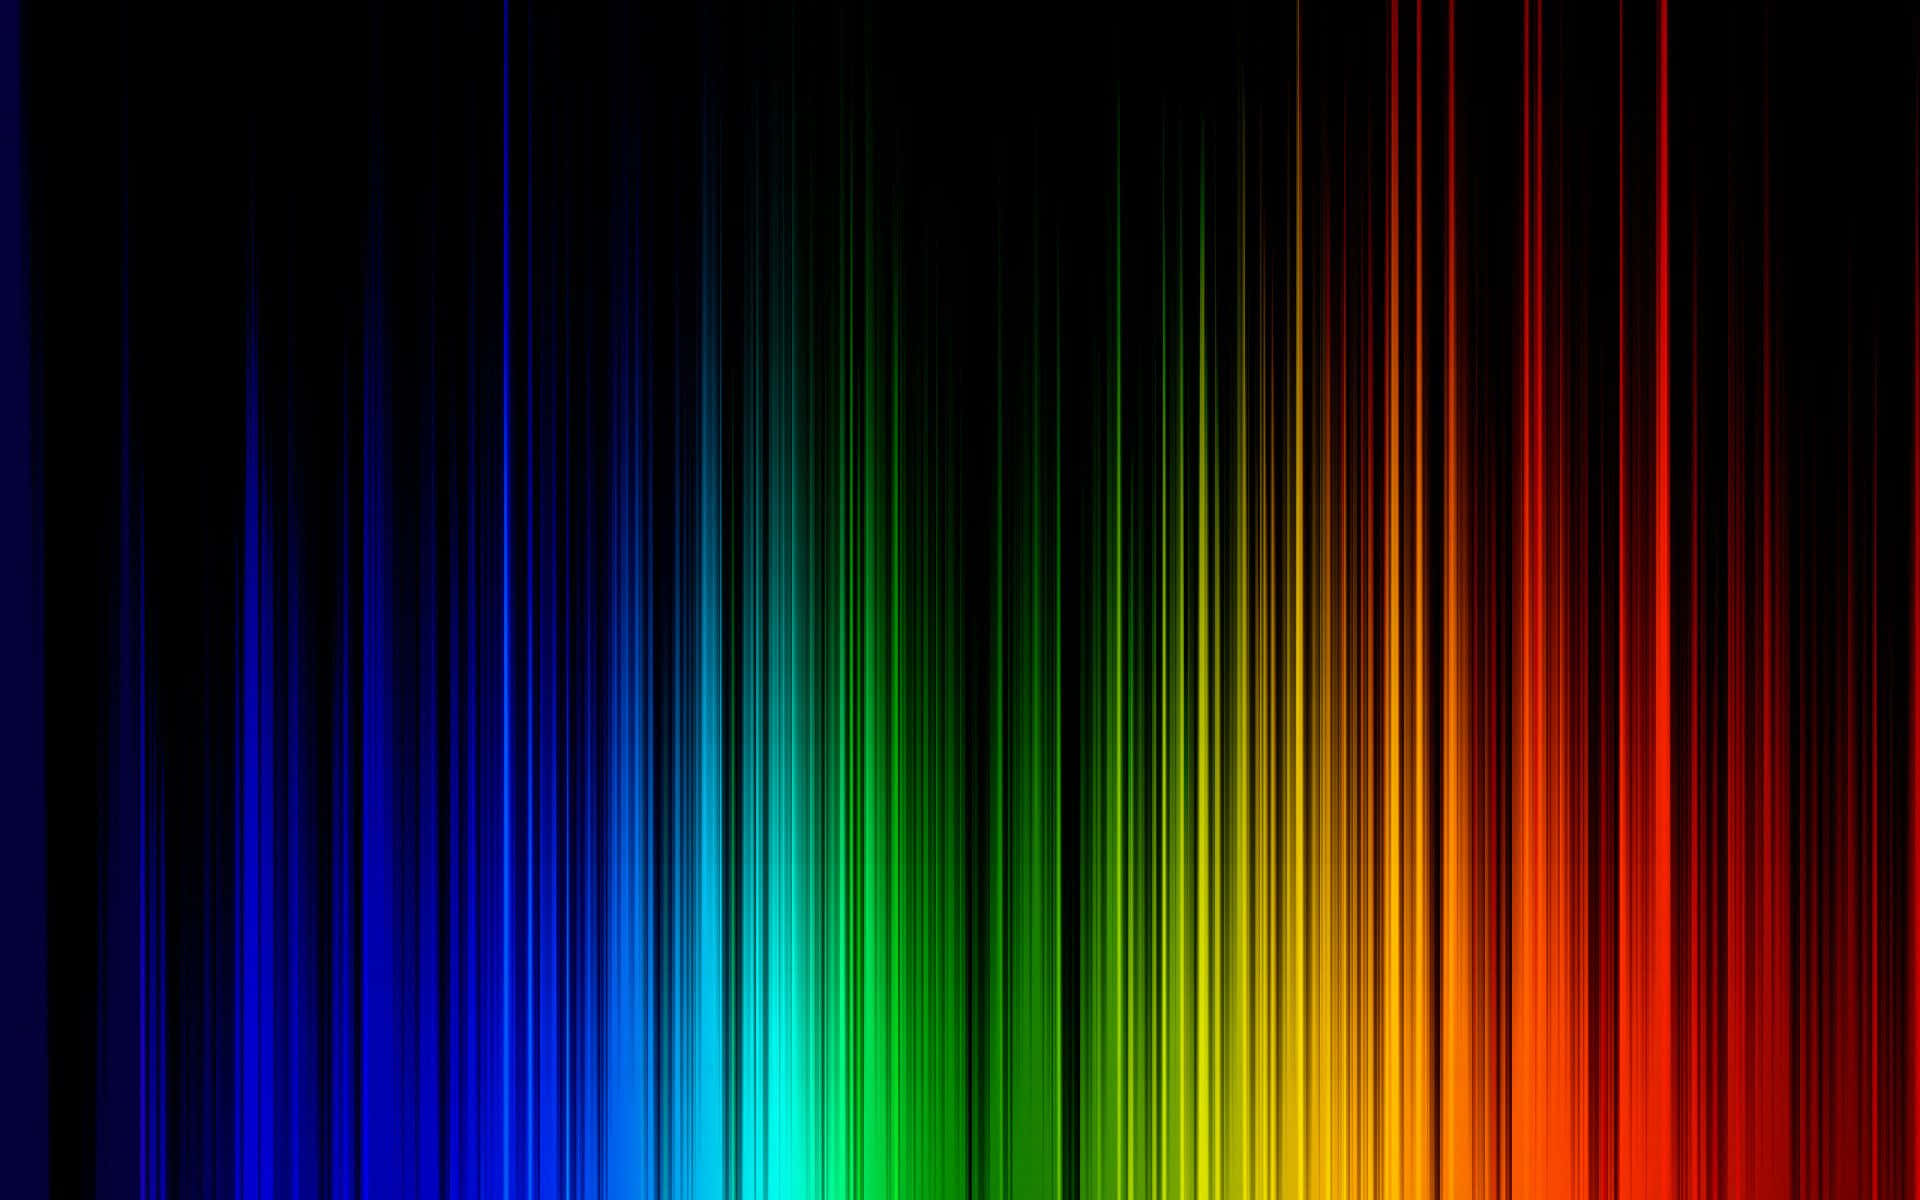 Vibrant Colors Illuminate The World